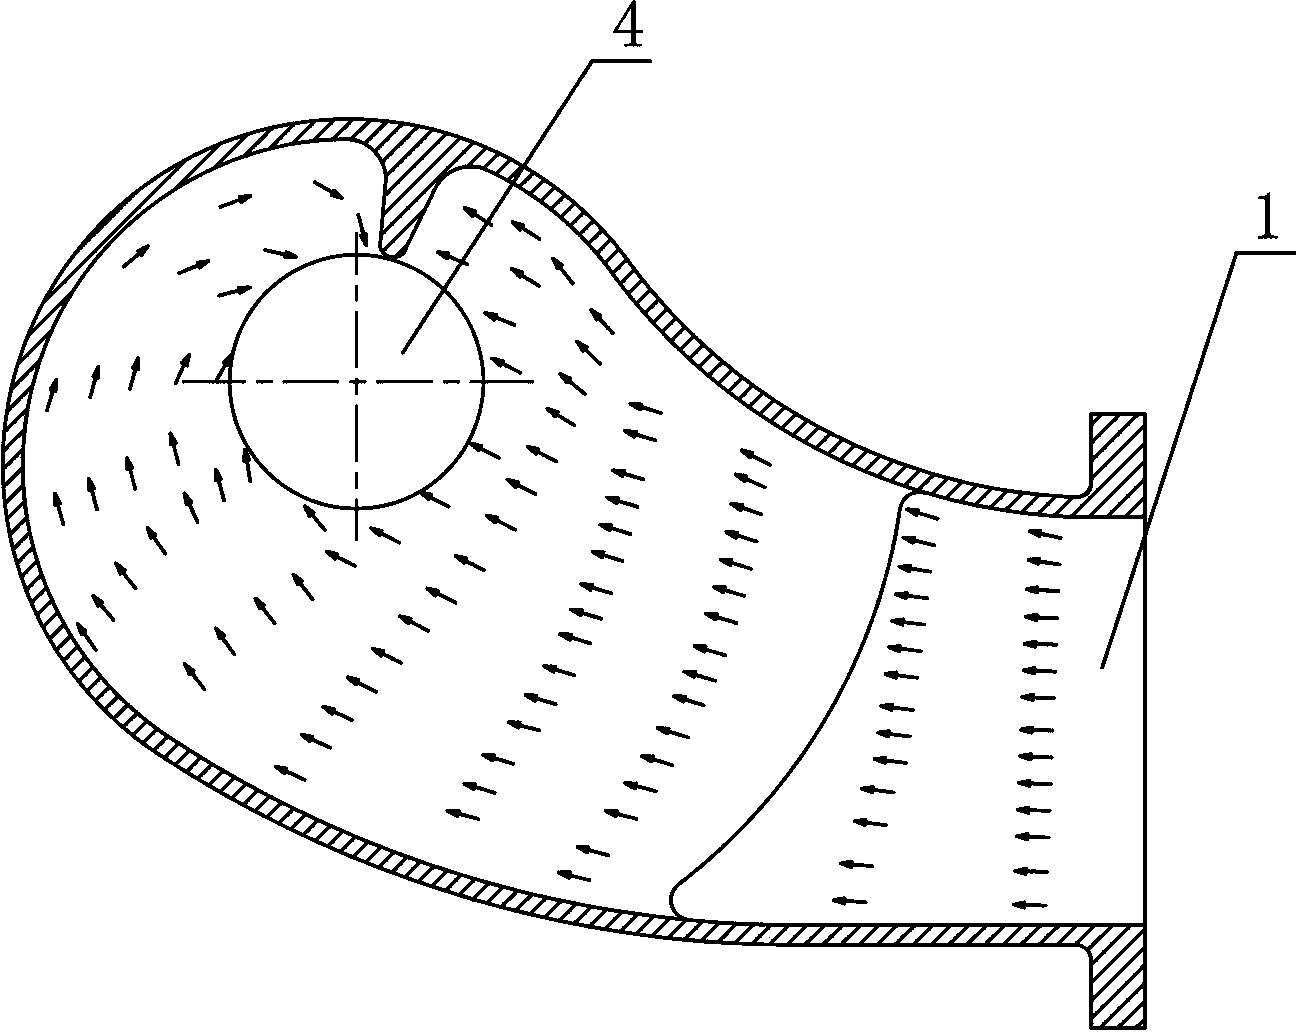 Water inlet flow channel of axially split pump